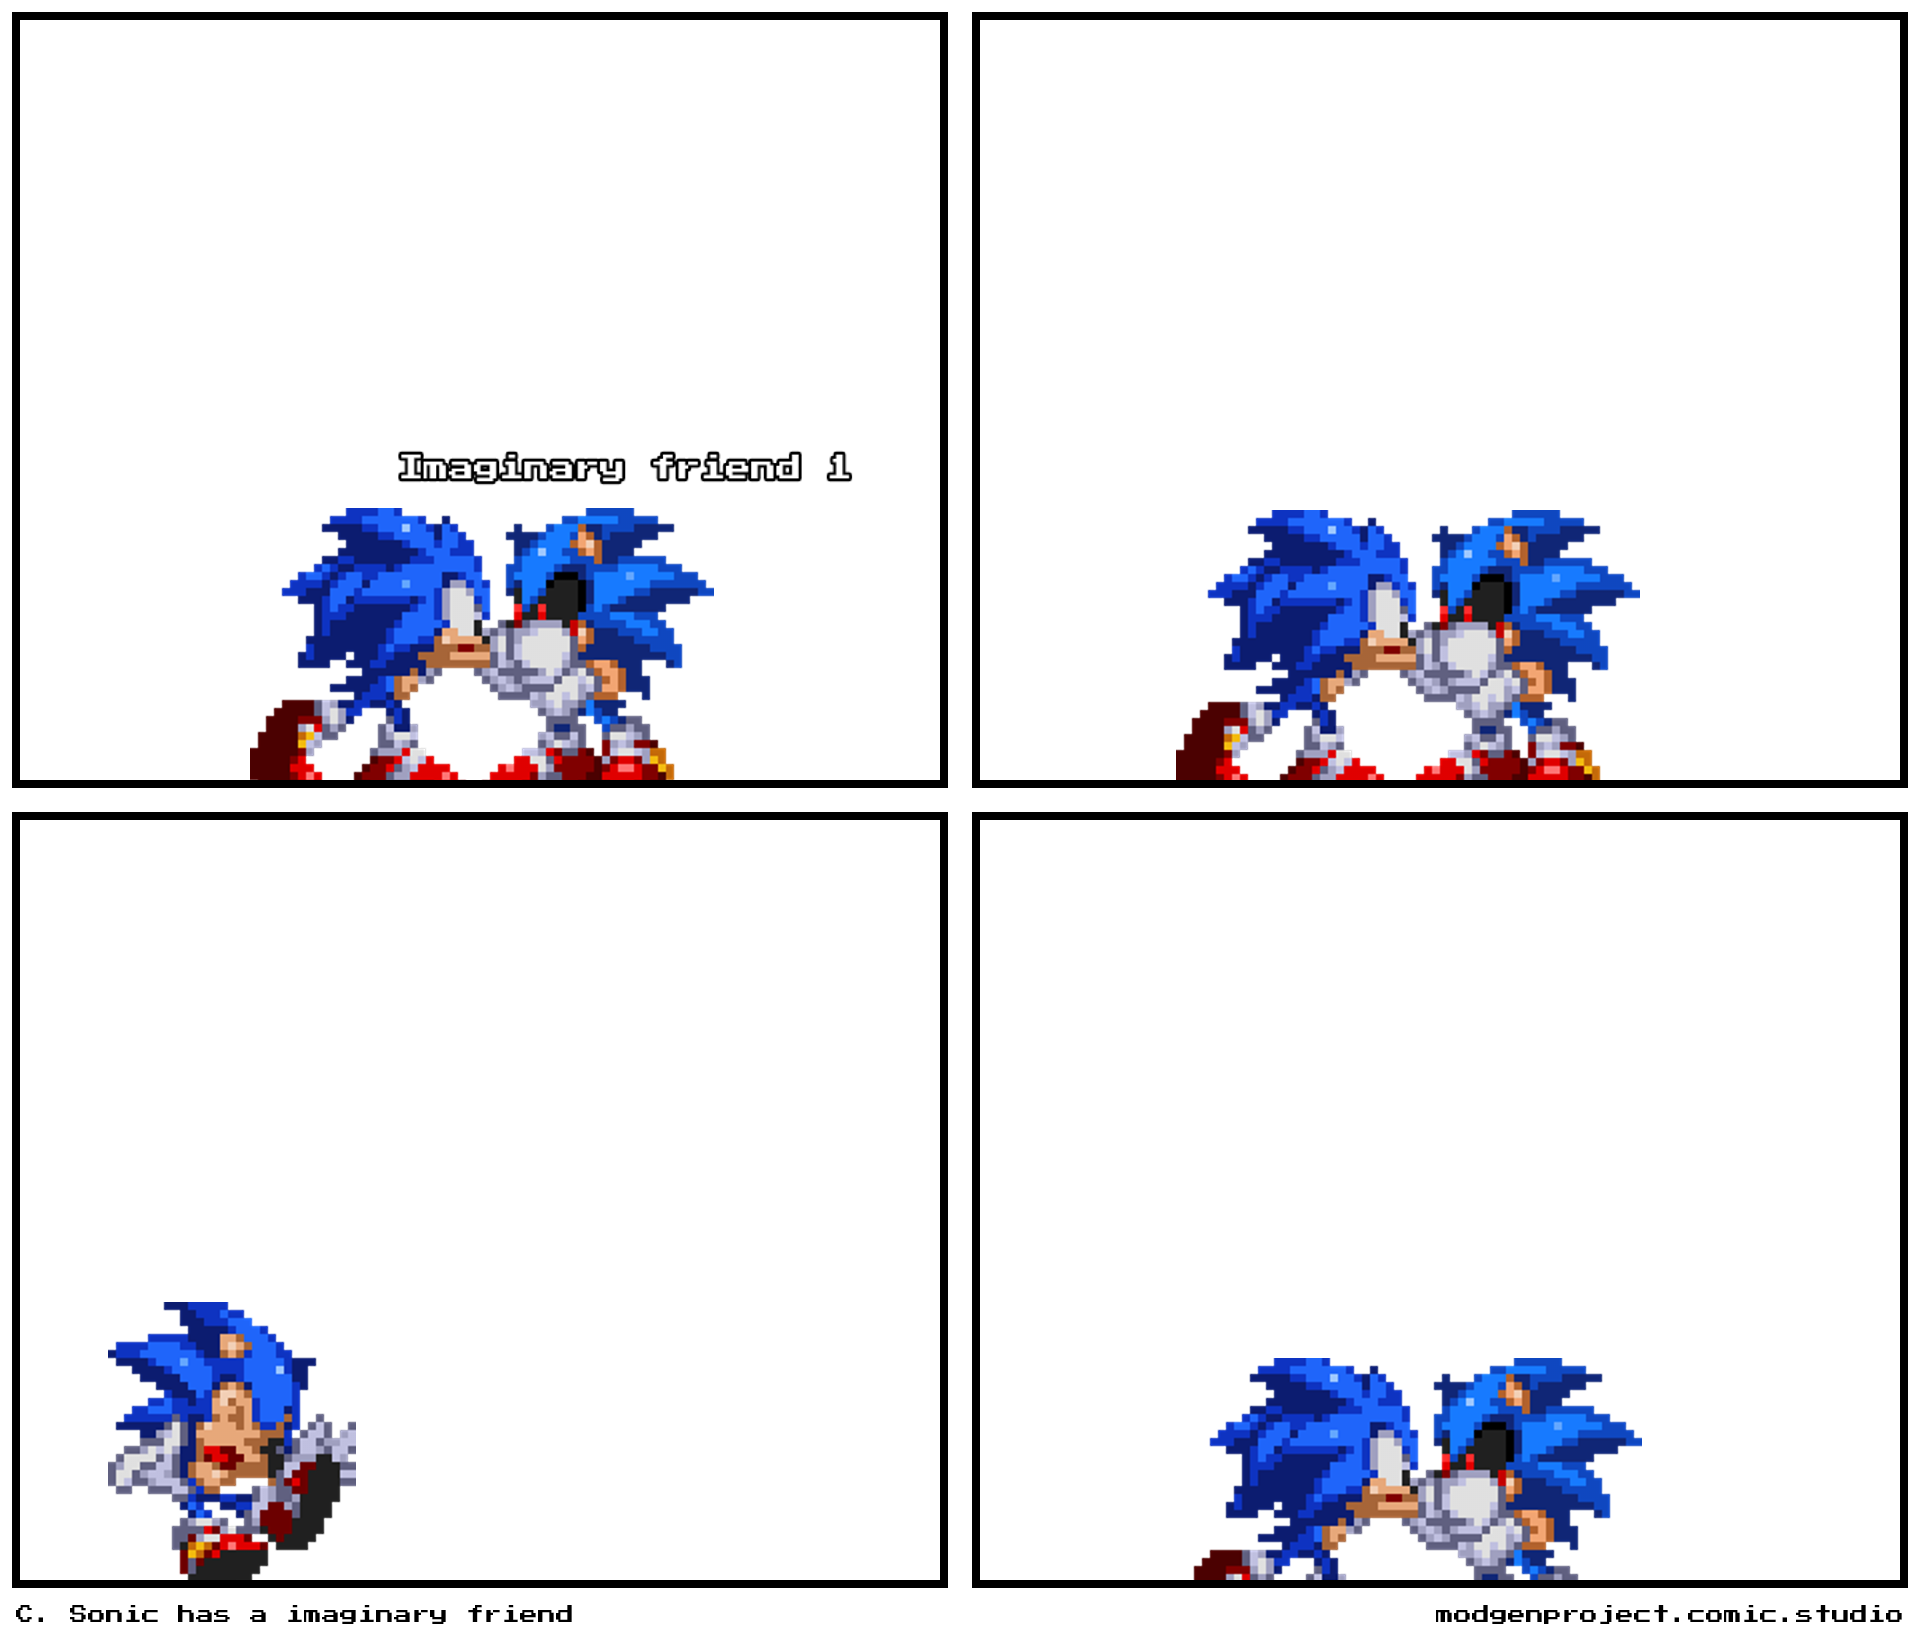 C. Sonic has a imaginary friend